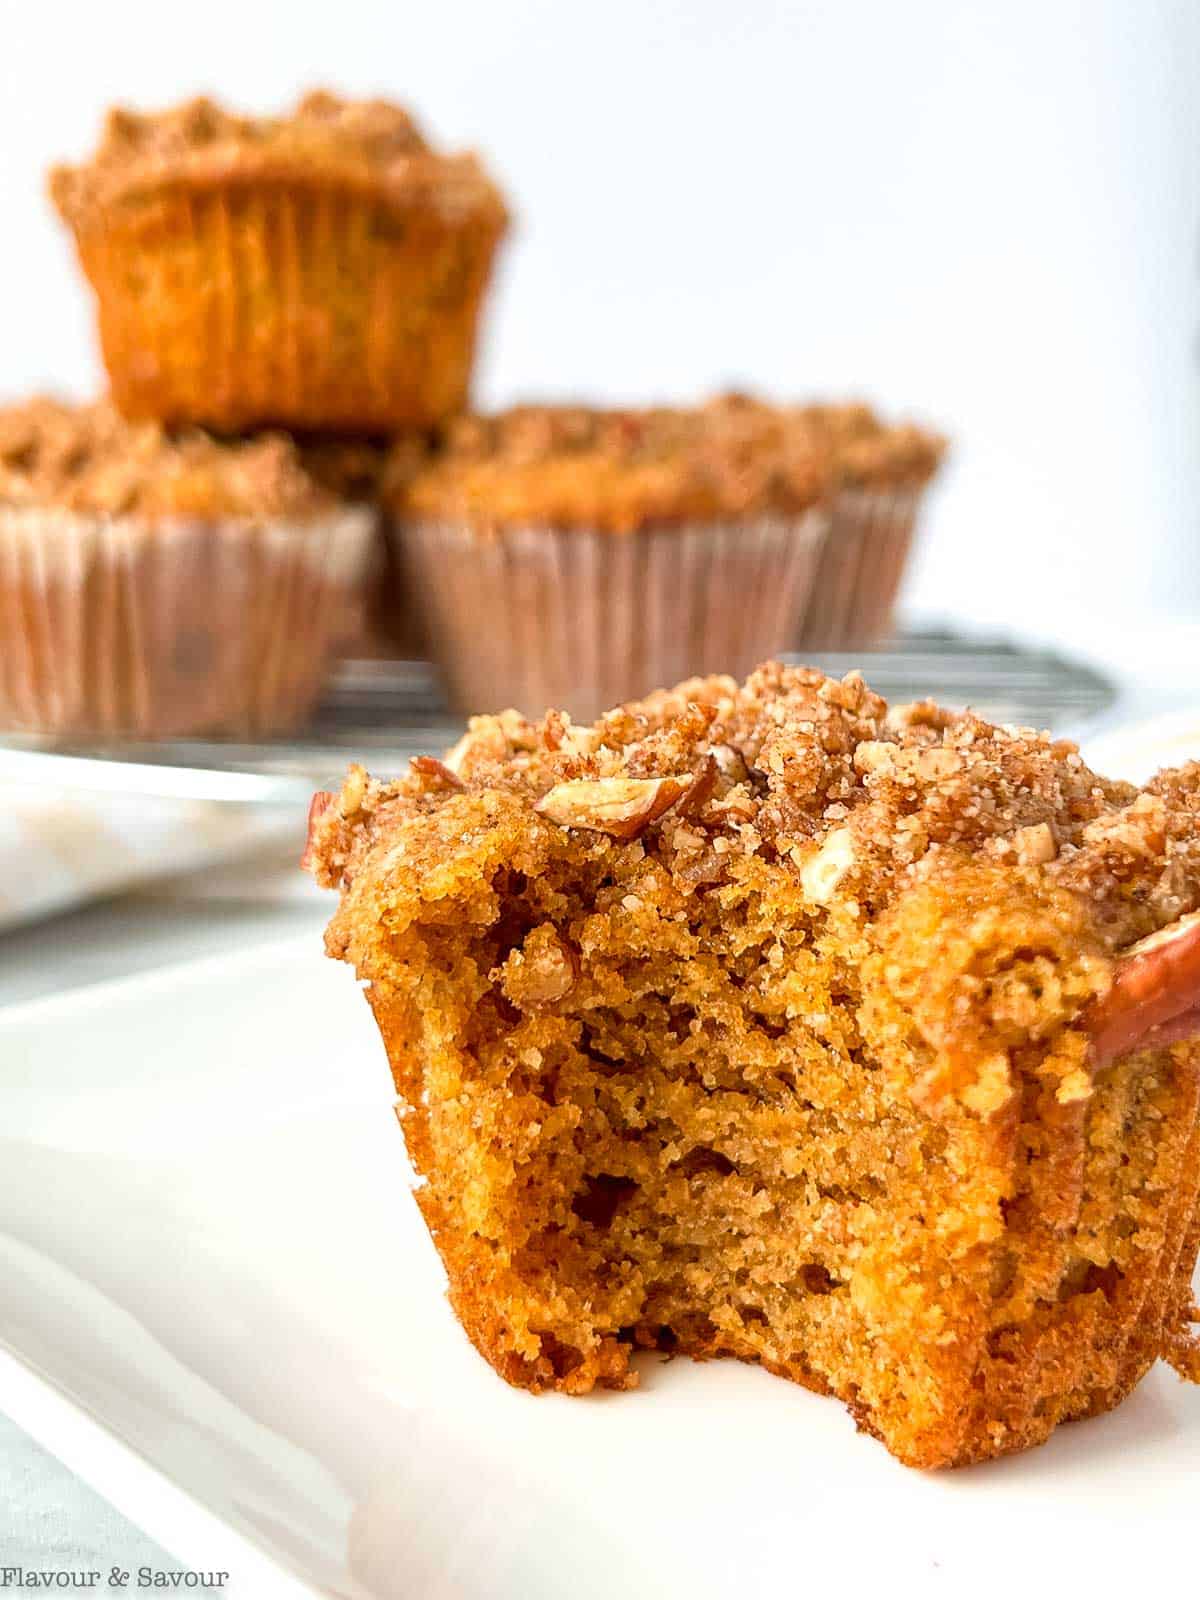 Almond flour pumpkin muffins, showing the inside texture of a muffin.